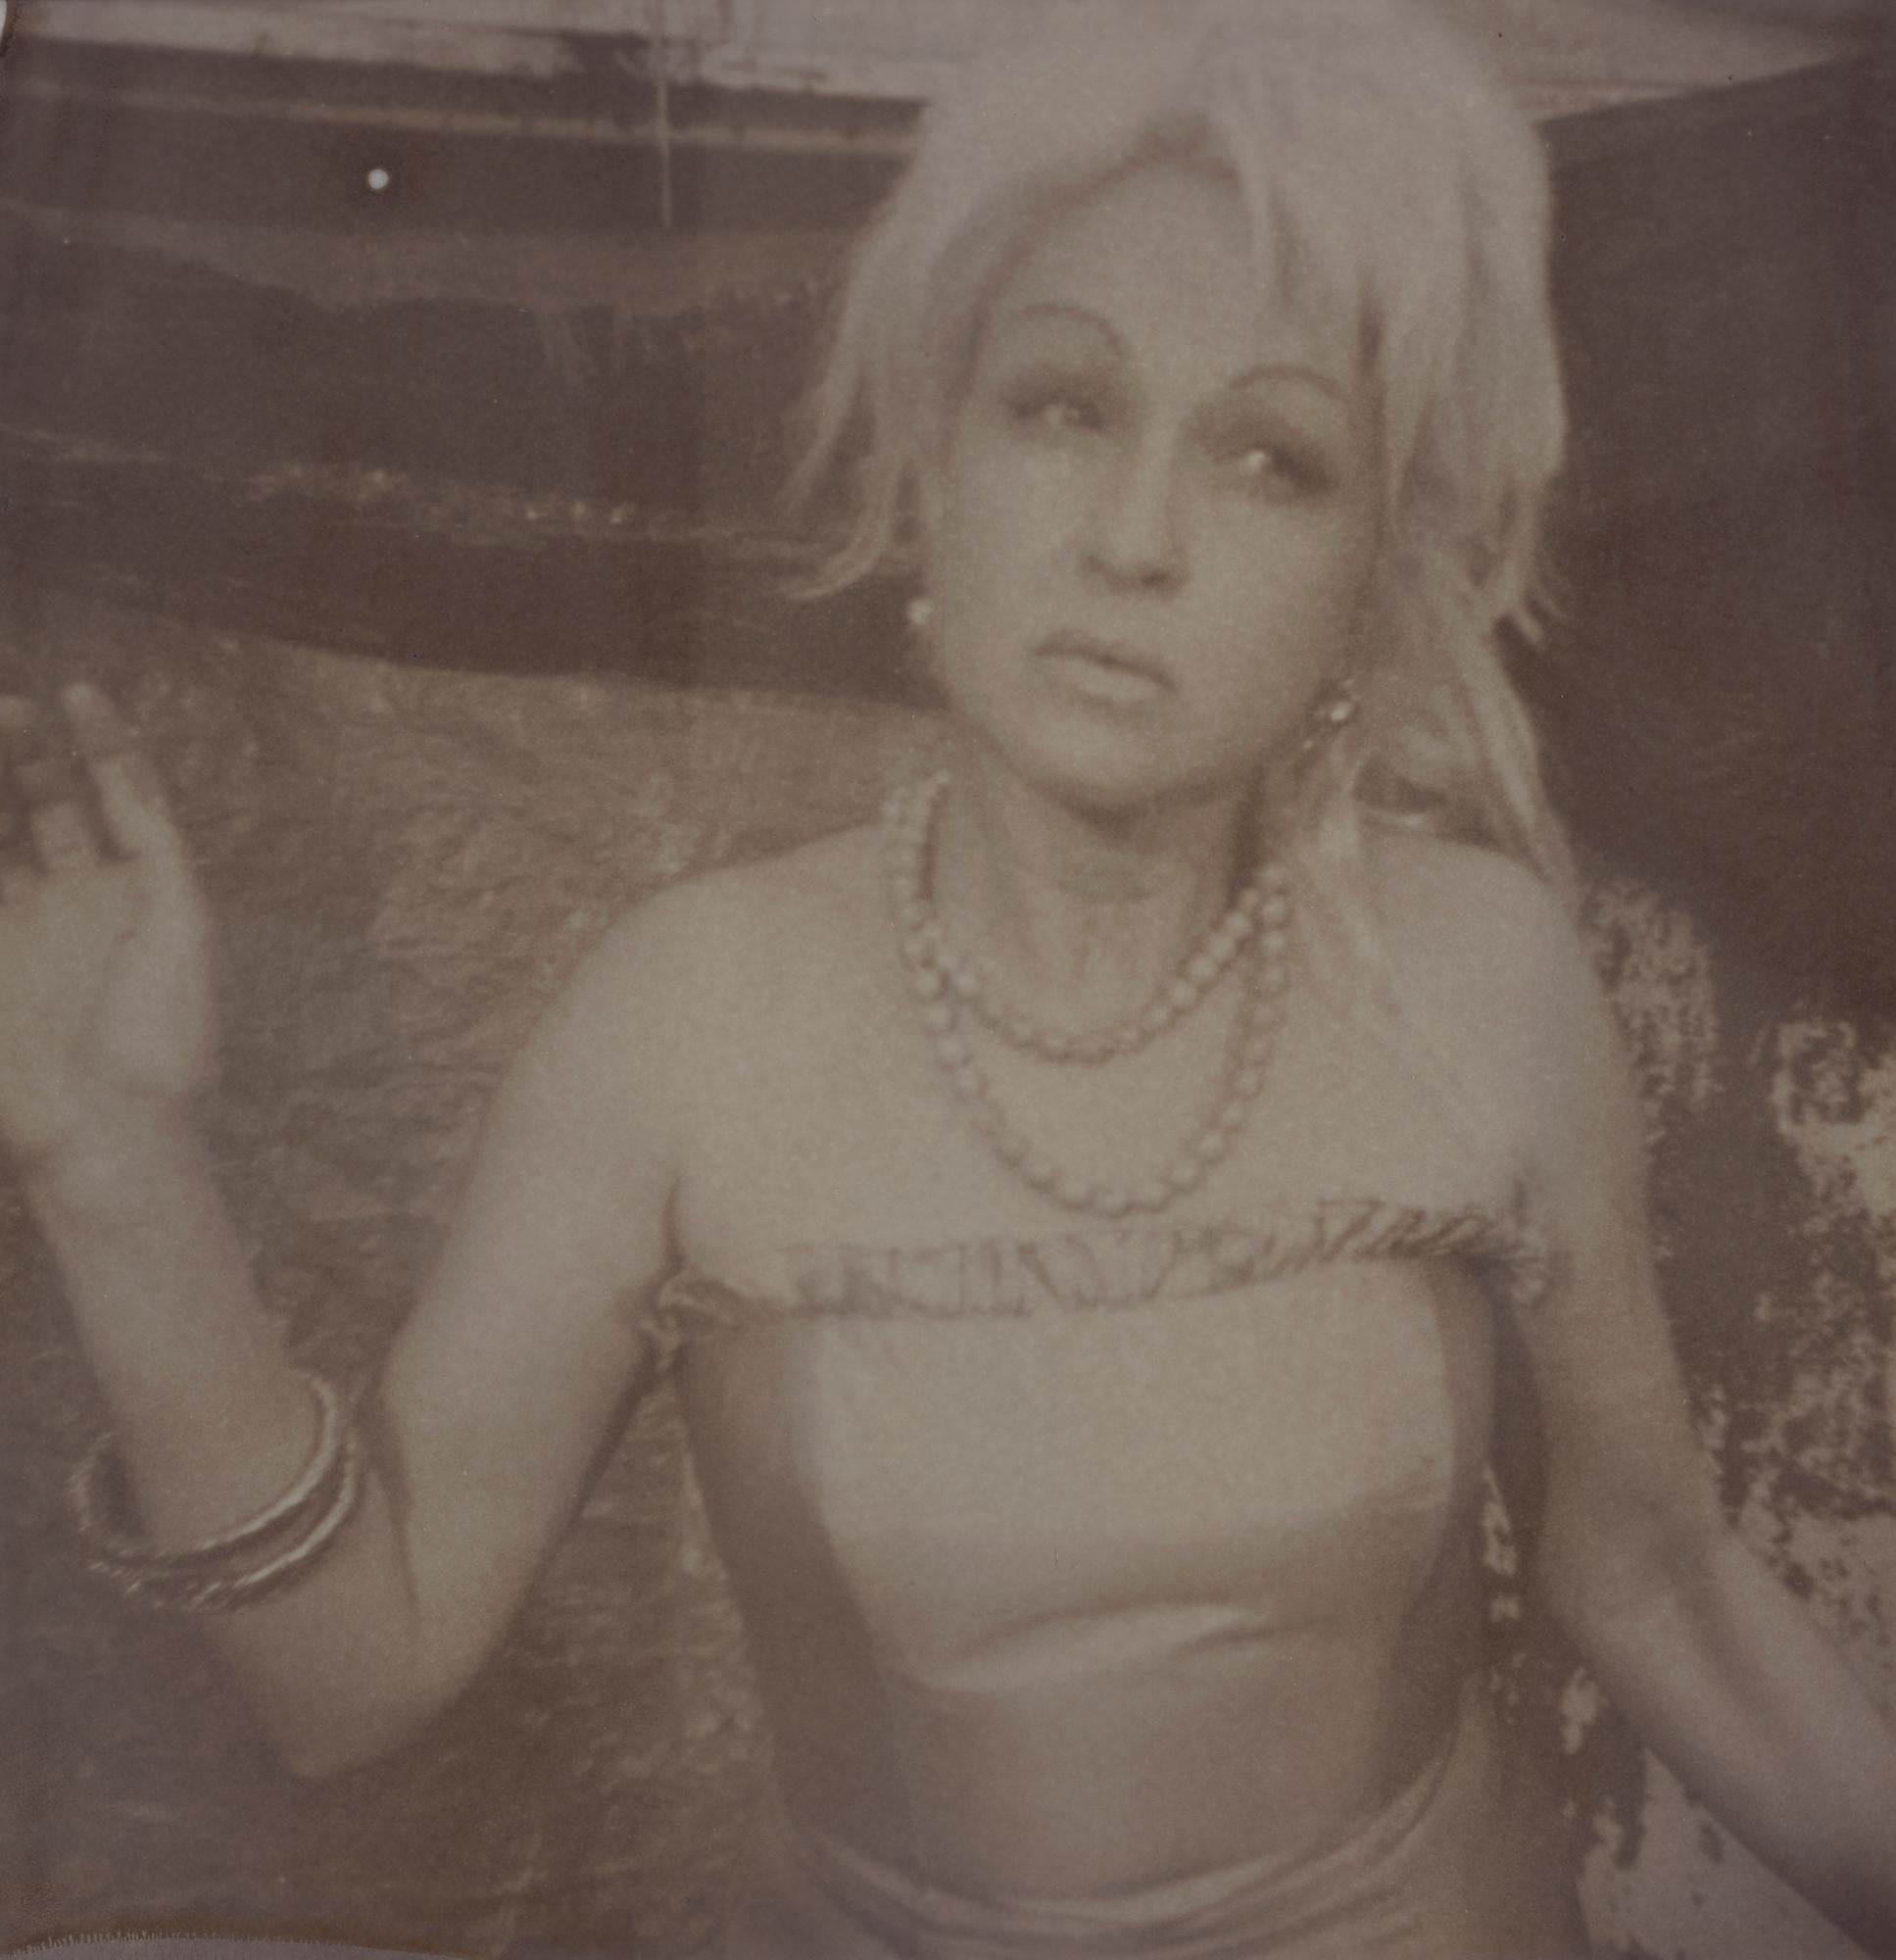 Stefanie Schneider Black and White Photograph - Shadows (Cyndi Lauper) - 'Bring Ya to the Brink' record cover shoot